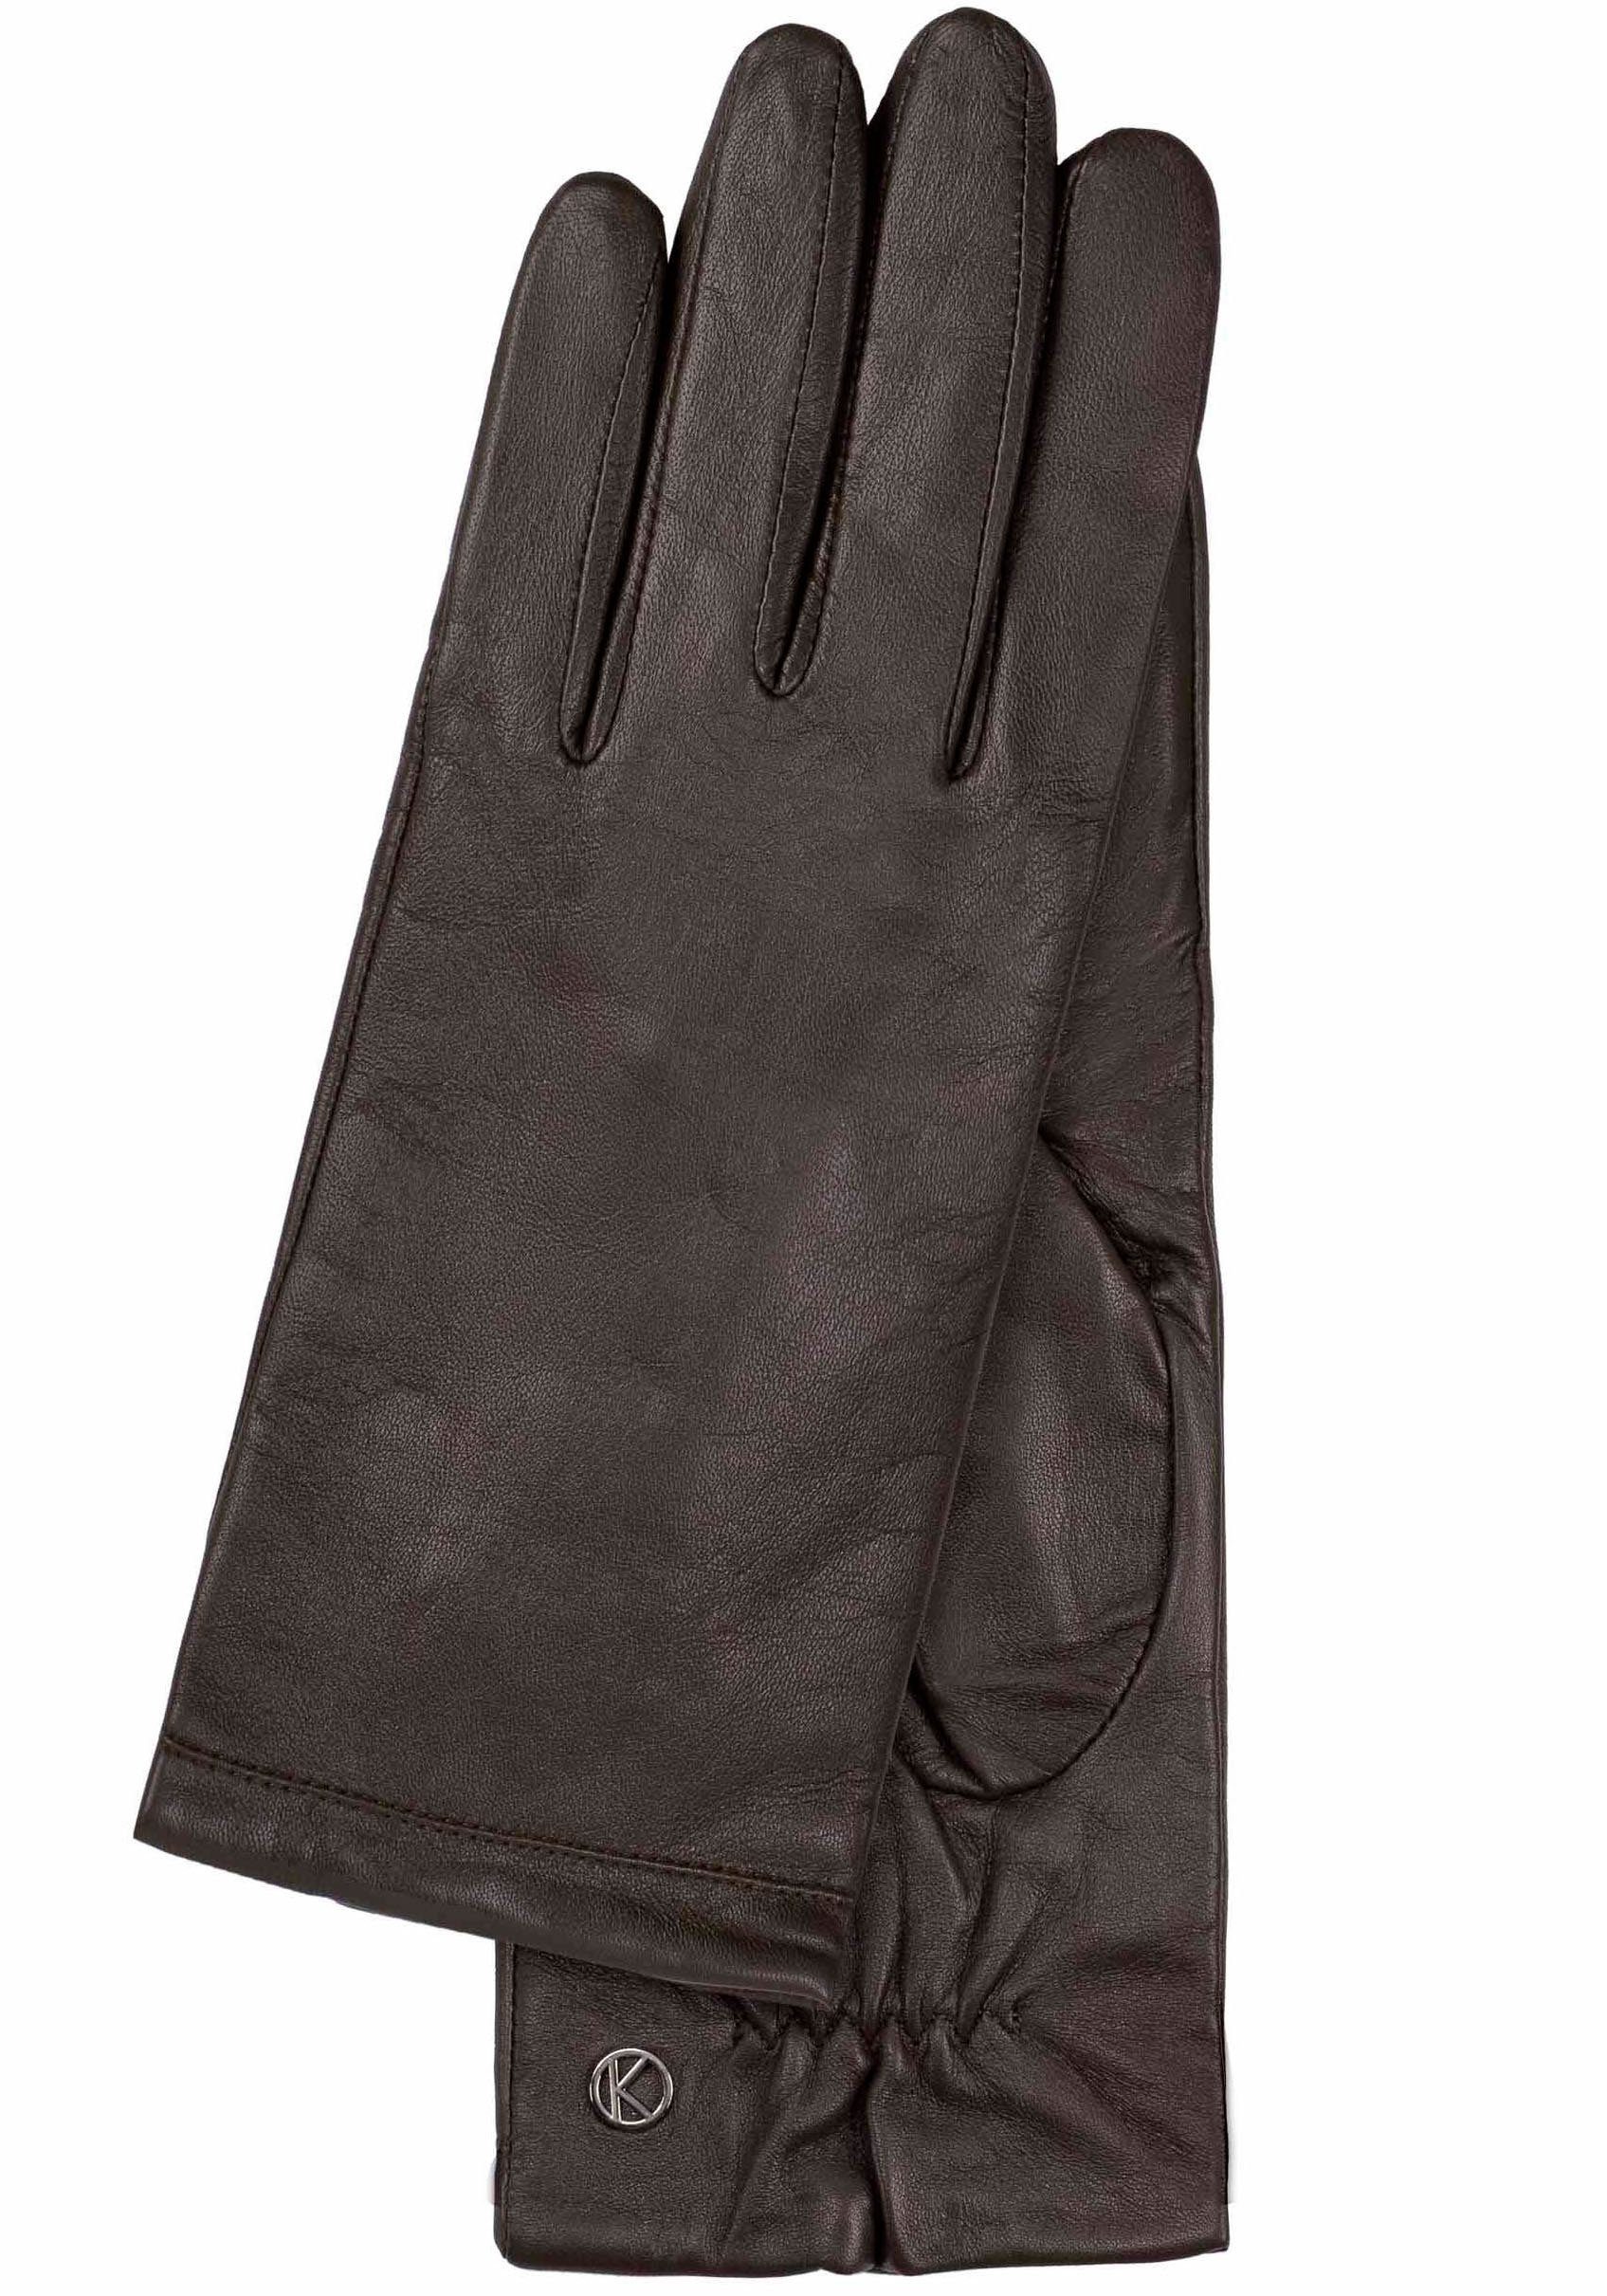 Zierbiesen KESSLER olive Lederhandschuhe schlanke Touchfunktion, Passform, Chelsea